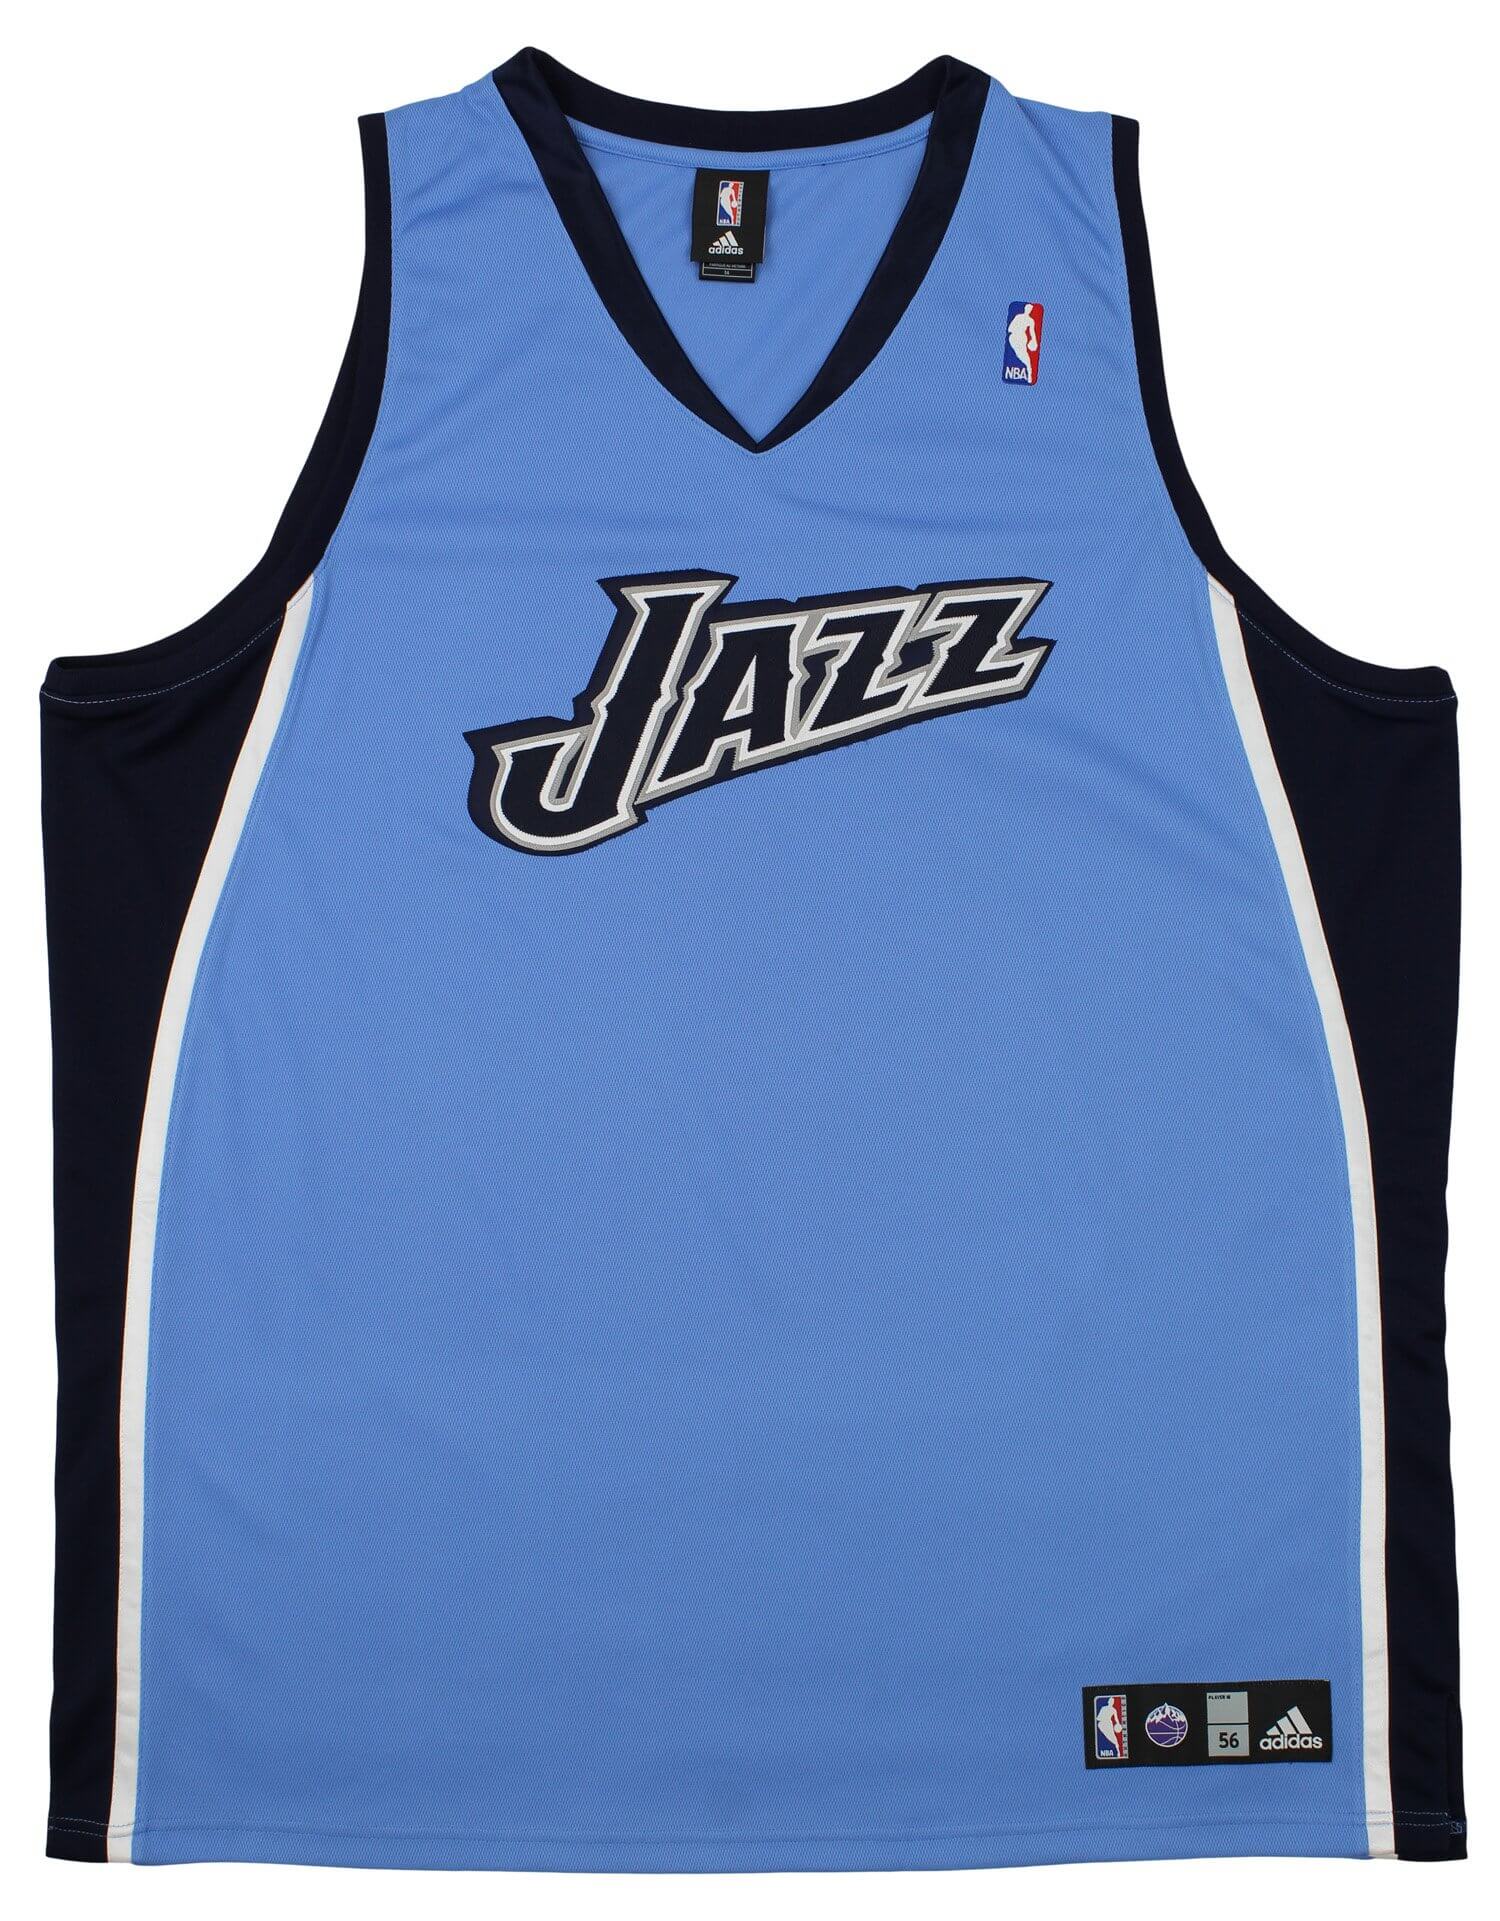 mendigo Disipar Decaer Adidas NBA Men's Utah Jazz Blank Basketball Jersey, Blue – Fanletic